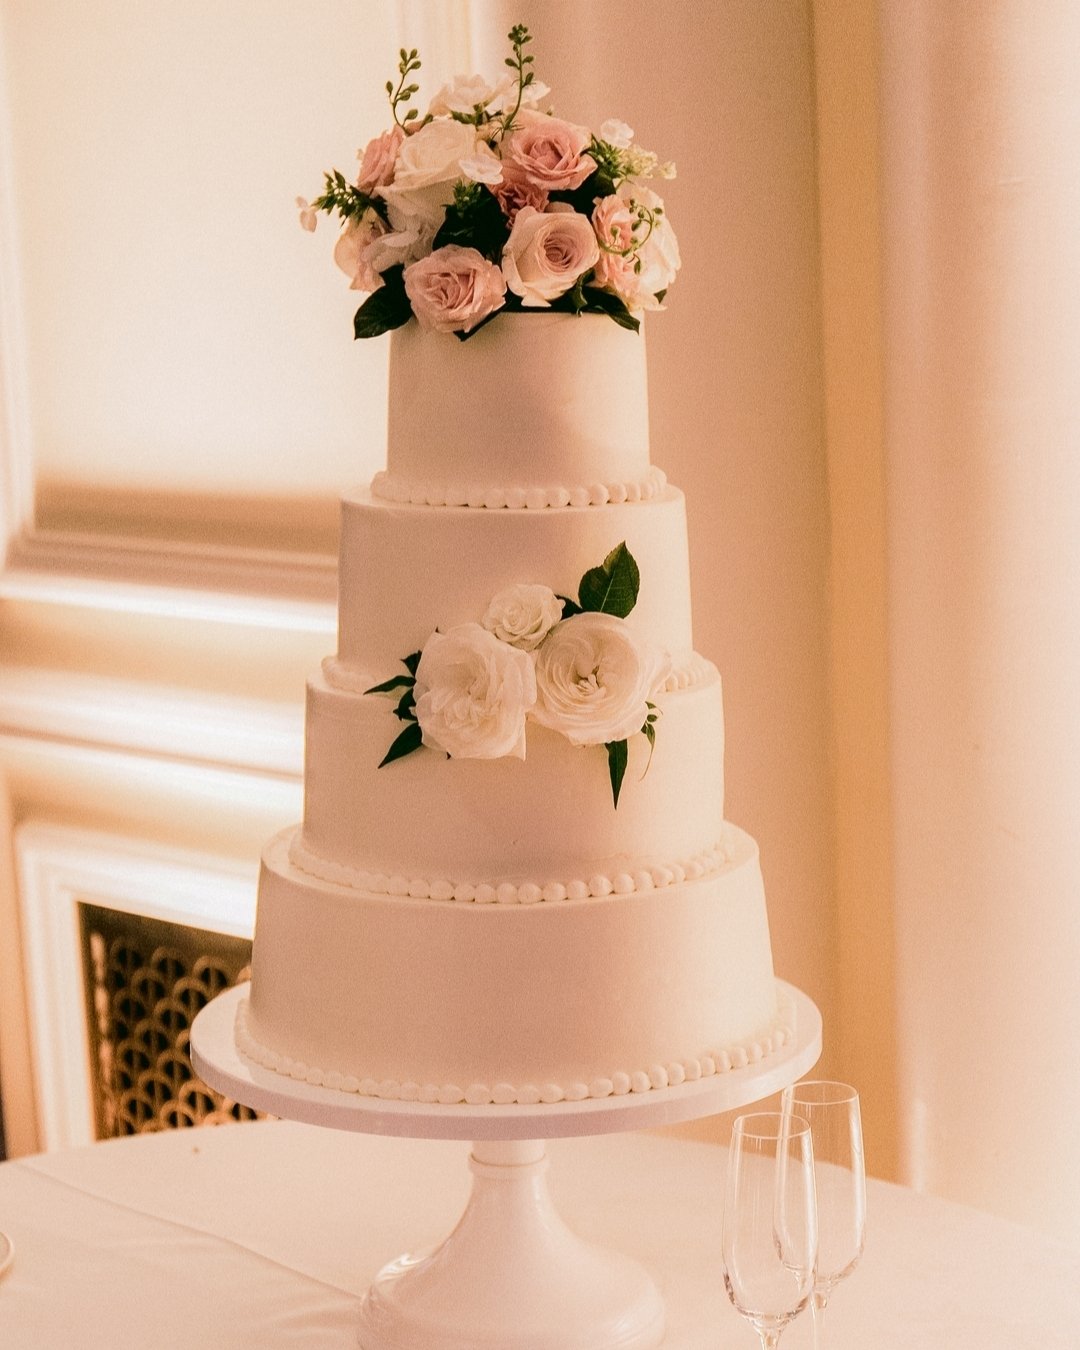 Give them cake! 

#michaelkressphoto #brideandgroom #wedding #love #marriage #weddingday #dcphotographer #photographer #weddingphotographer #bridal #engagement #justmarried #weddingstyle #bridalinspiration #bridegoals #perfectday #magicalweddings #be